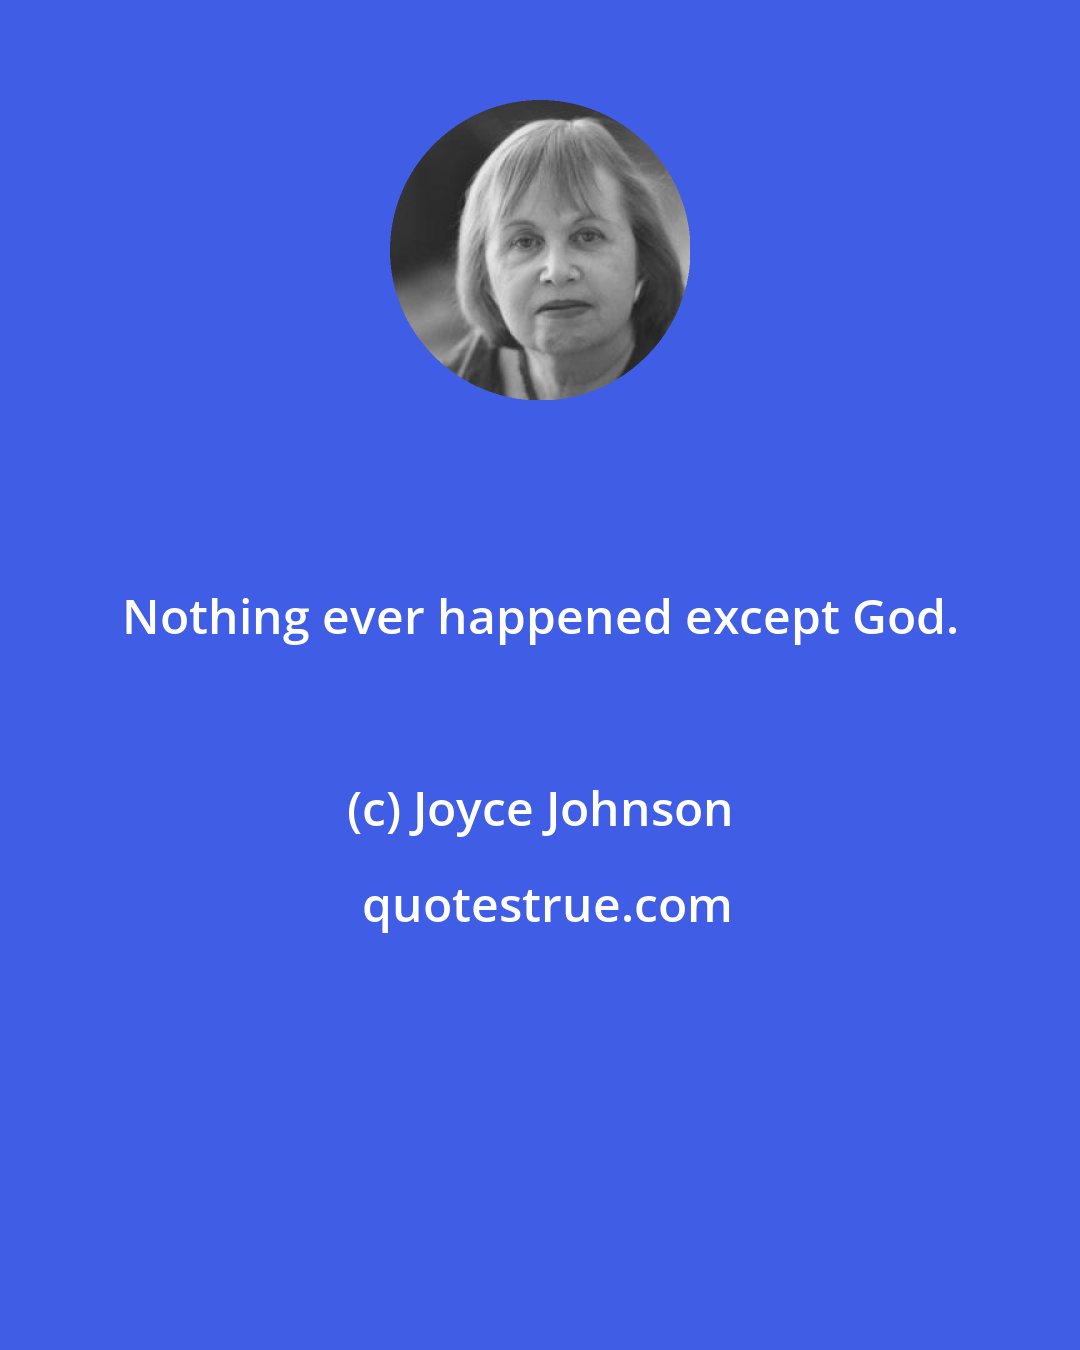 Joyce Johnson: Nothing ever happened except God.